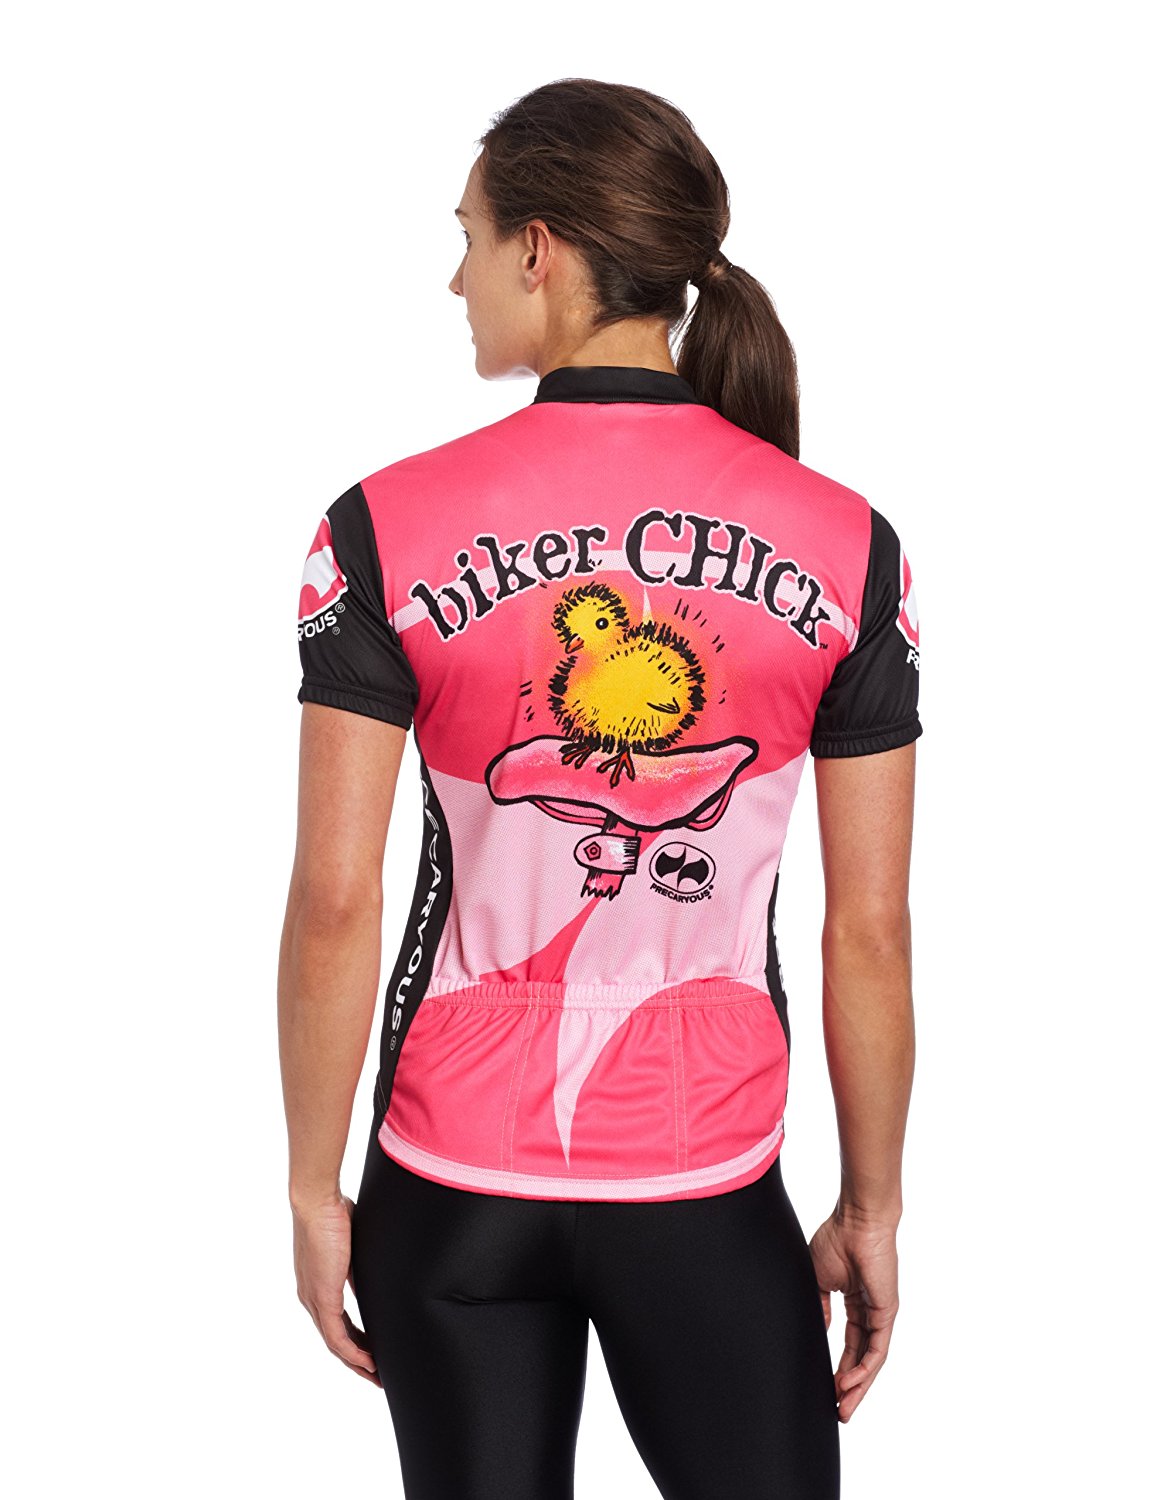 Biker Chick Cycling Jersey - Pink (S, M, L, XL)